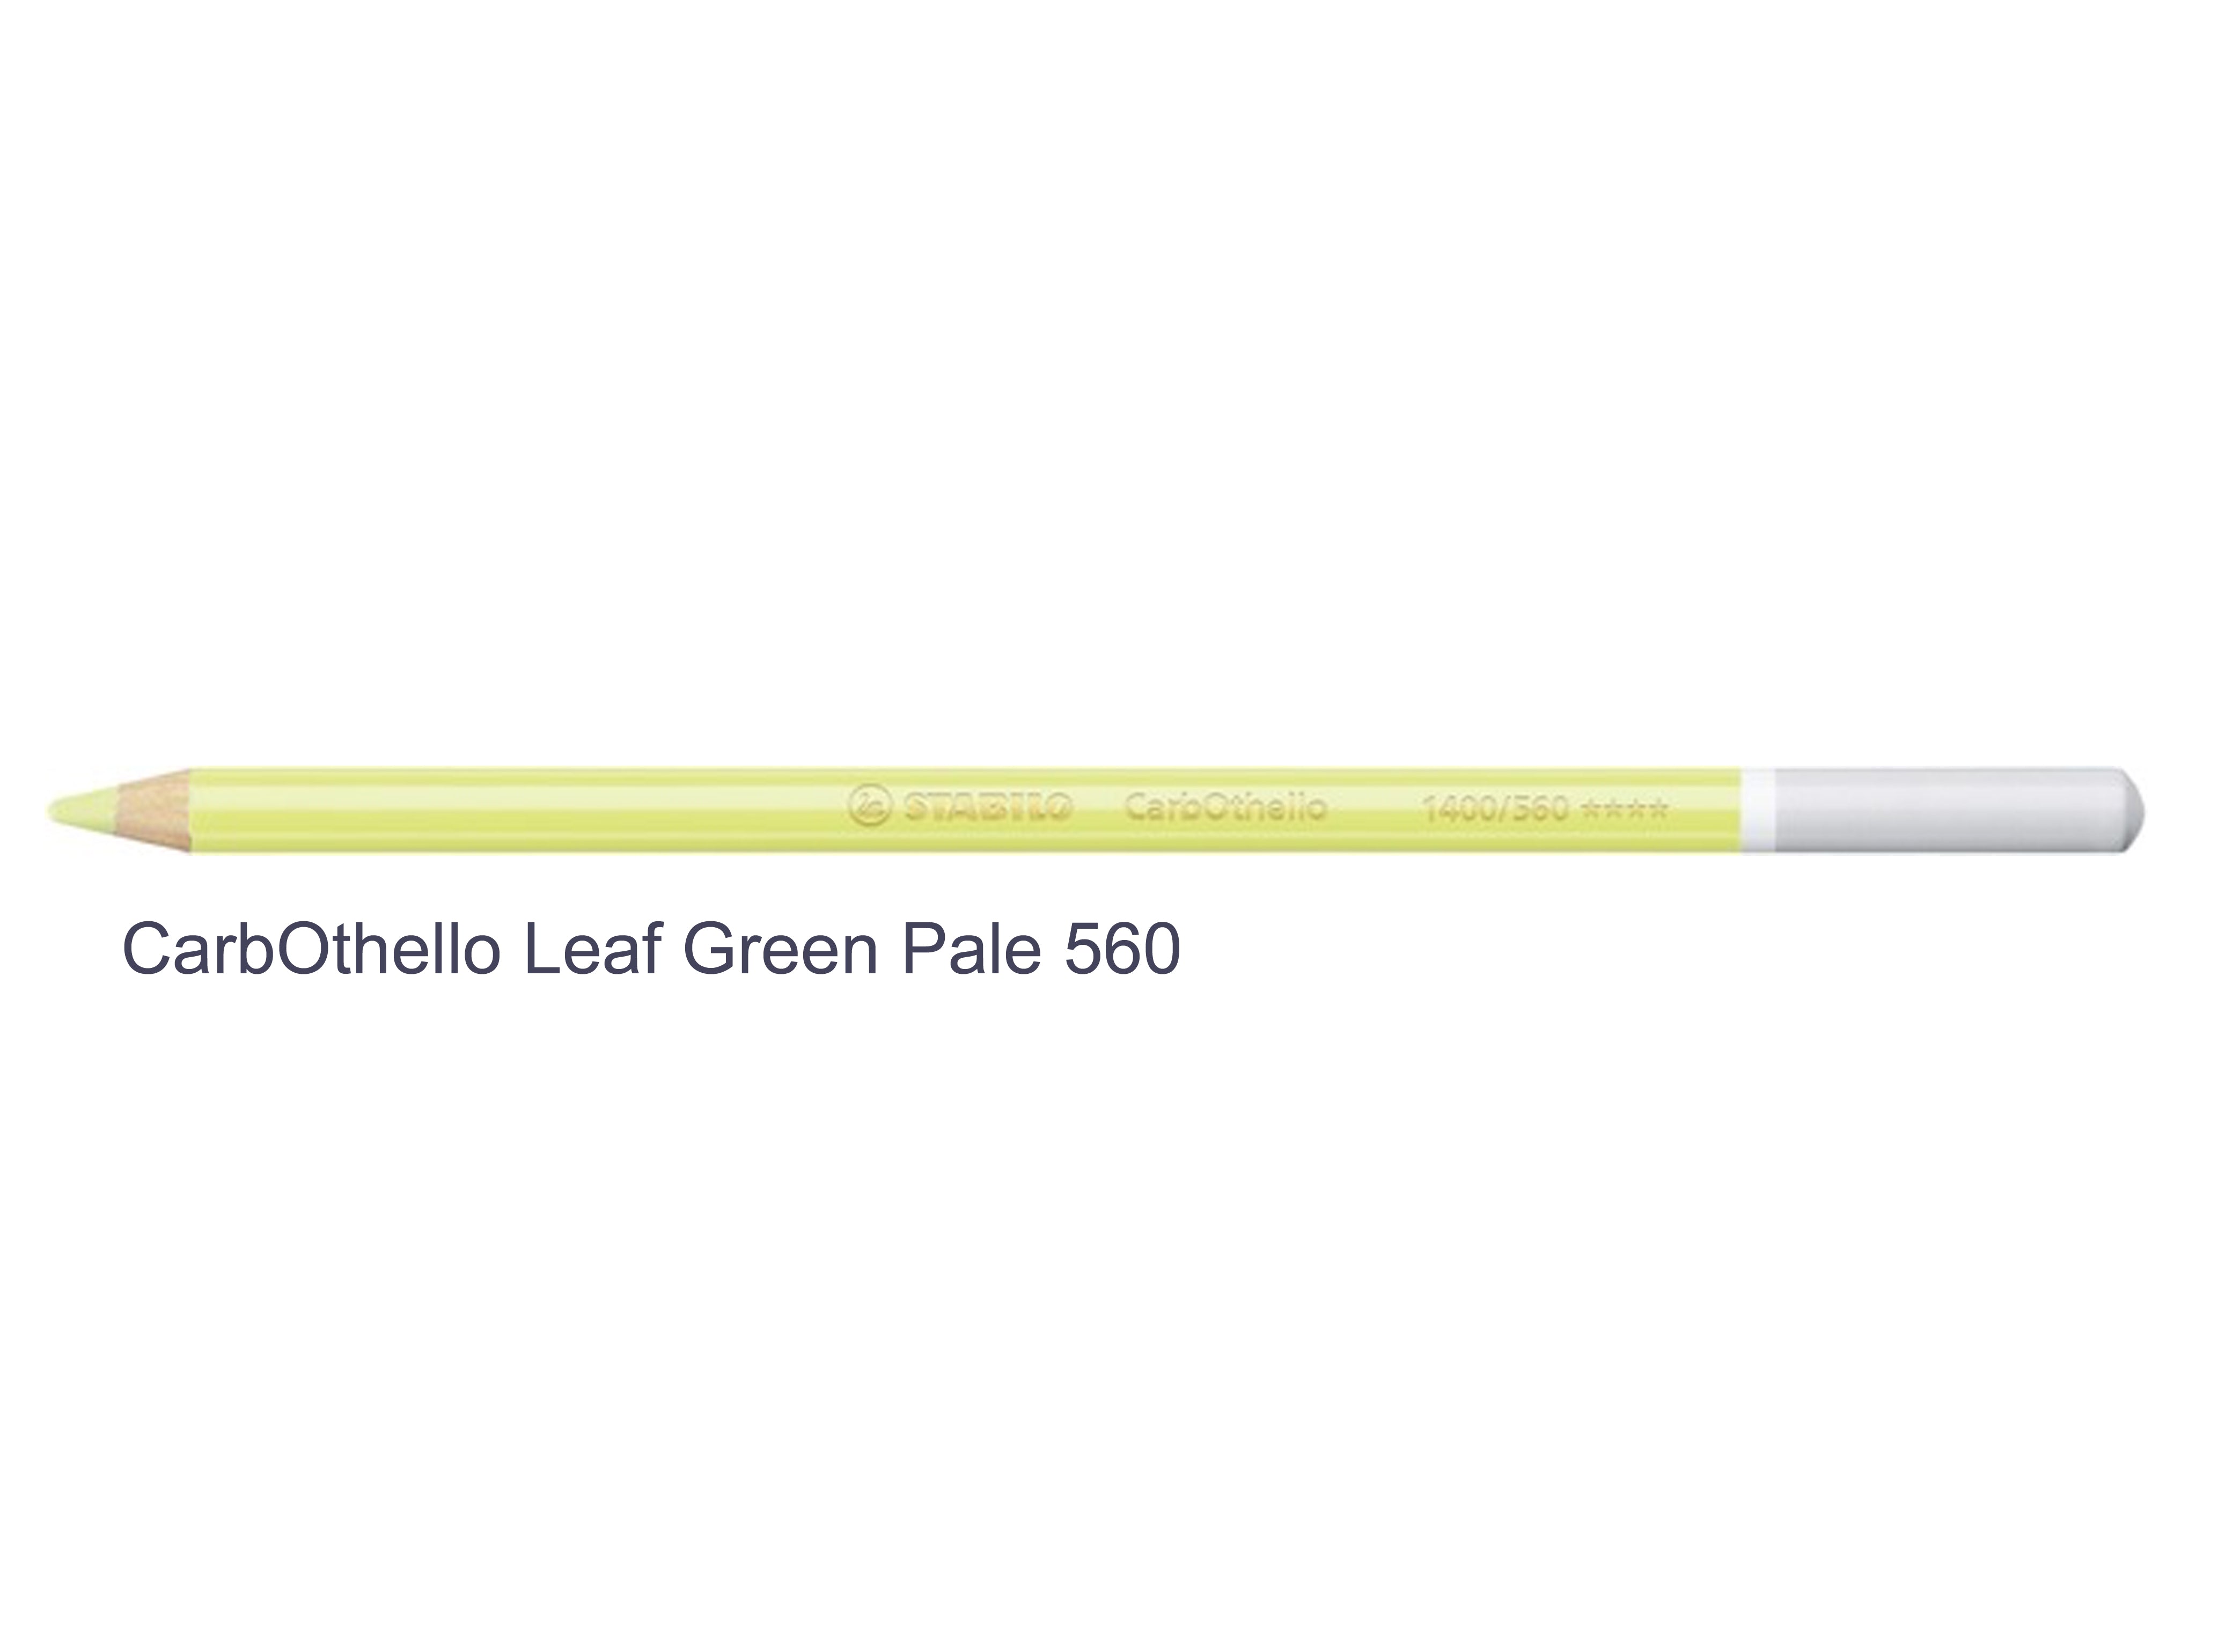 Leaf green pale 560 STABILO CarbOthello chalk-pastel pencils